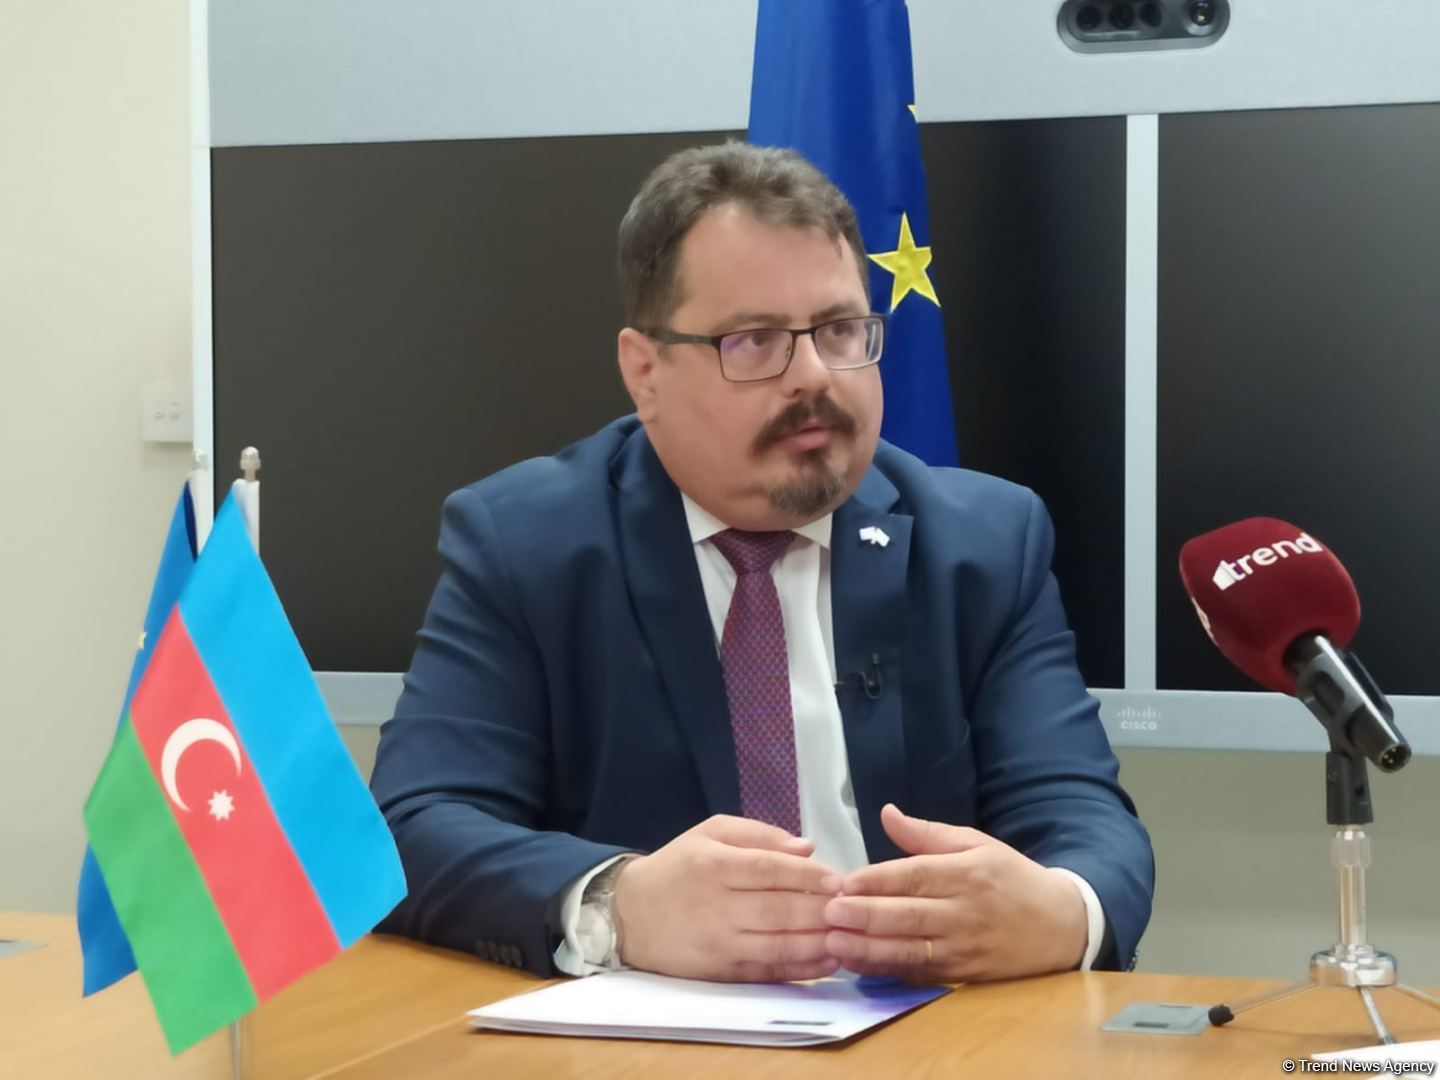 EU companies show interest in Azerbaijan’s renewable energy sector - ambassador